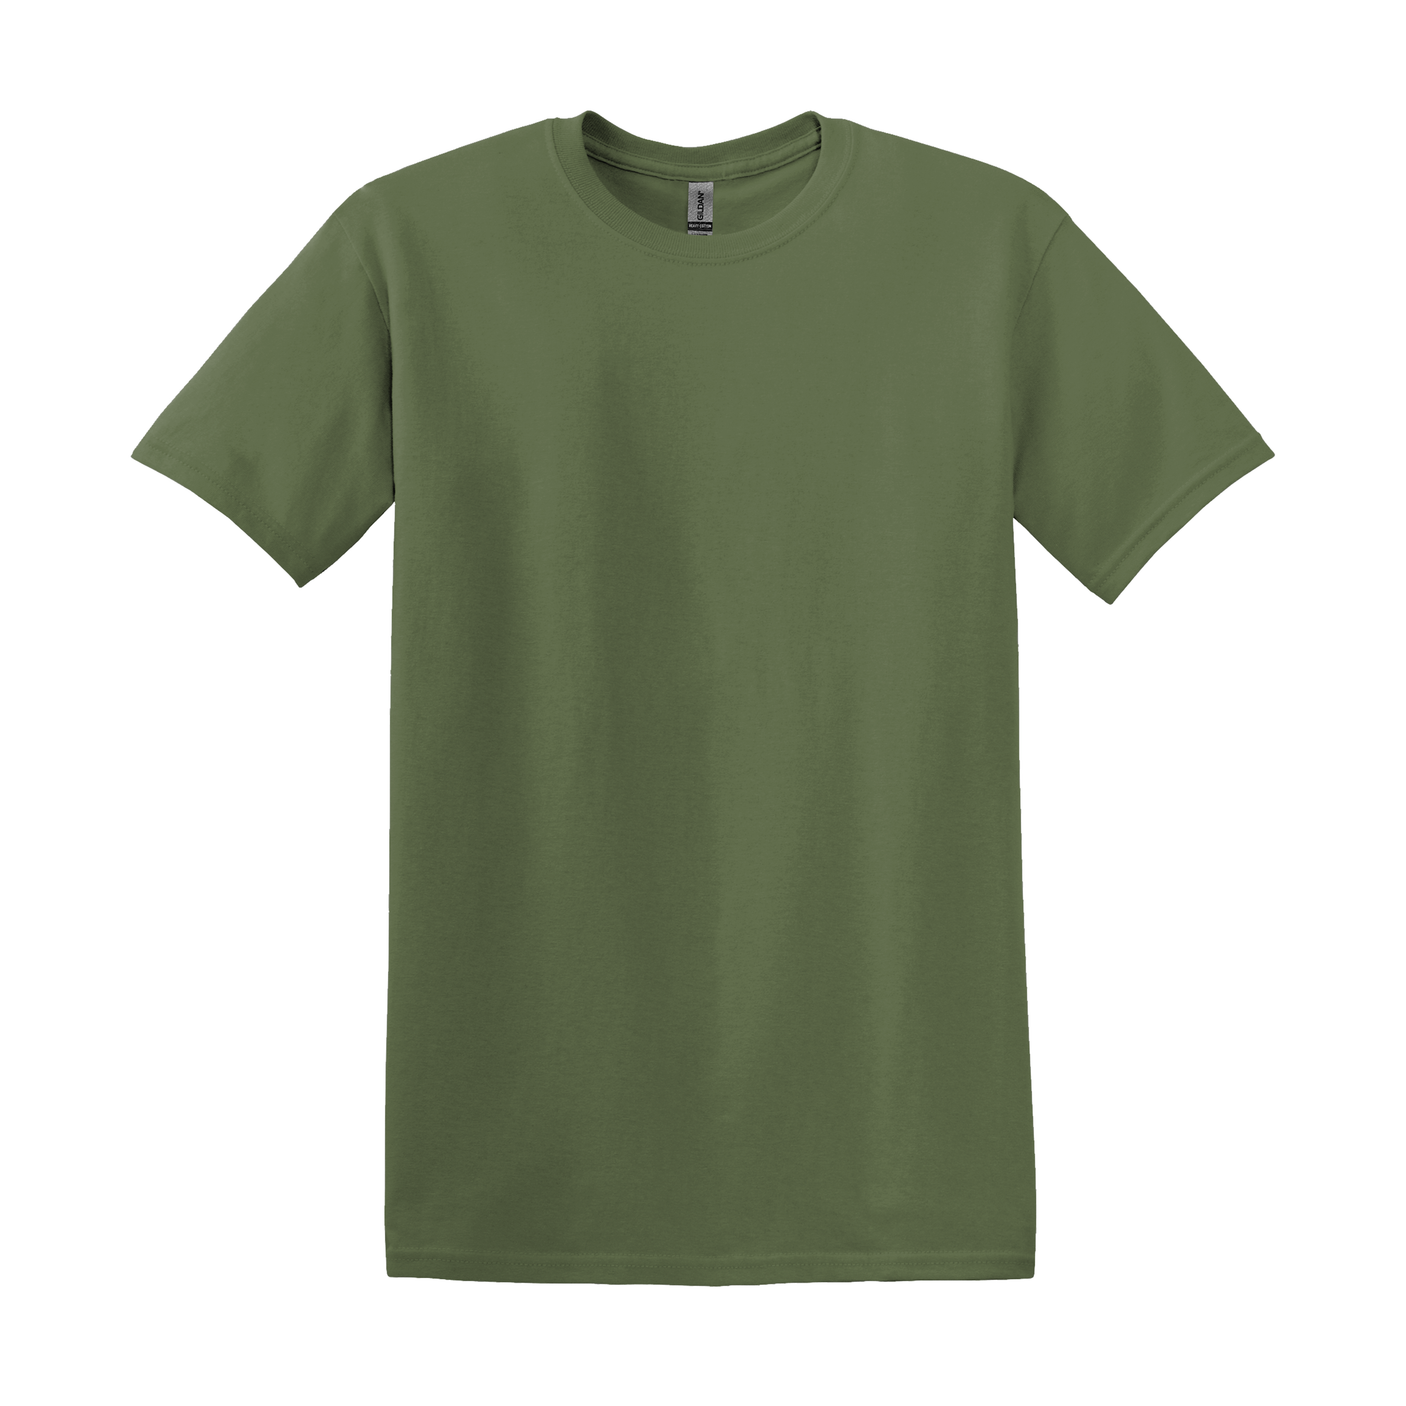 Gildan SoftStyle - Military Green